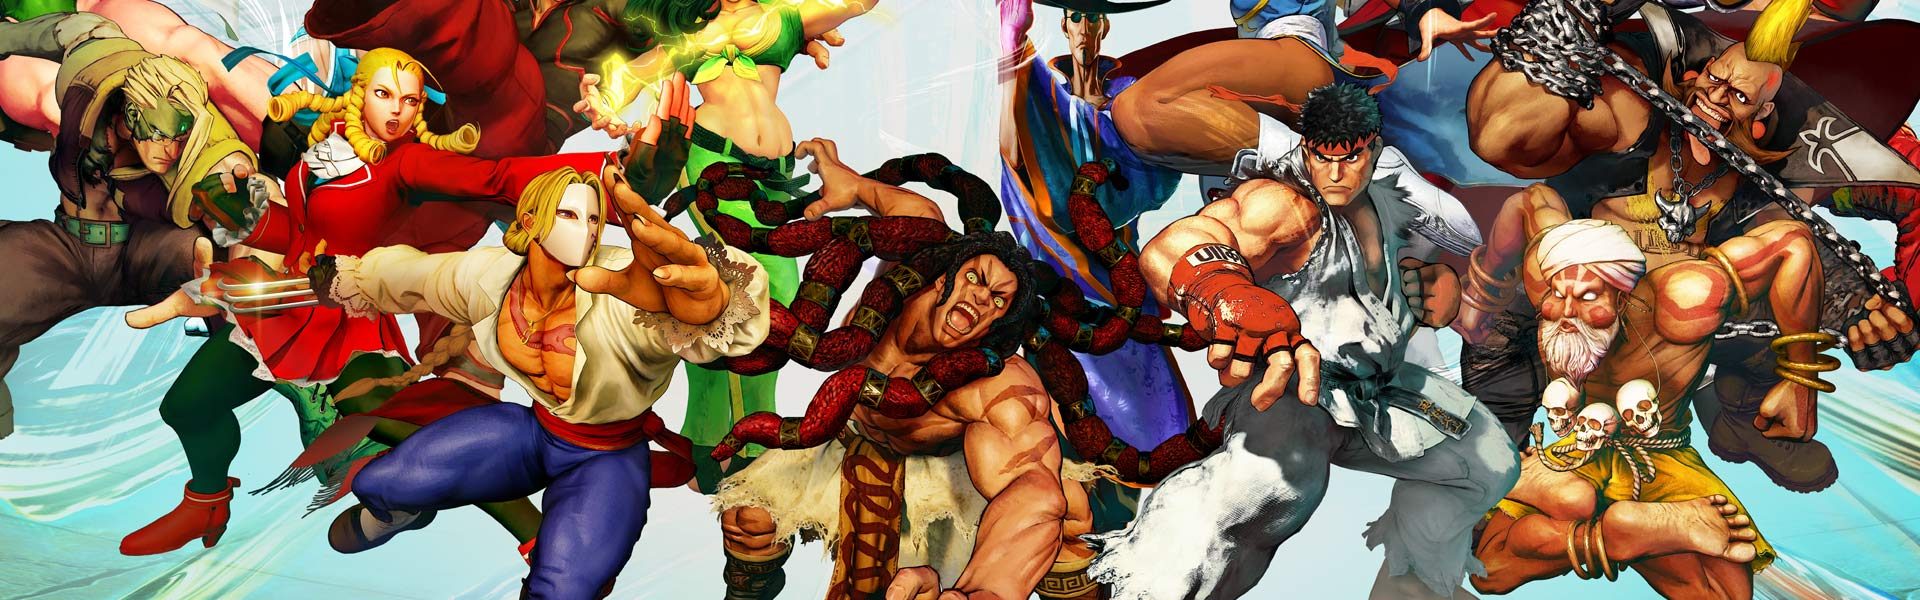 Capcom Cup 2016 Prize Pool increased, update on Street Fighter V DLC ...